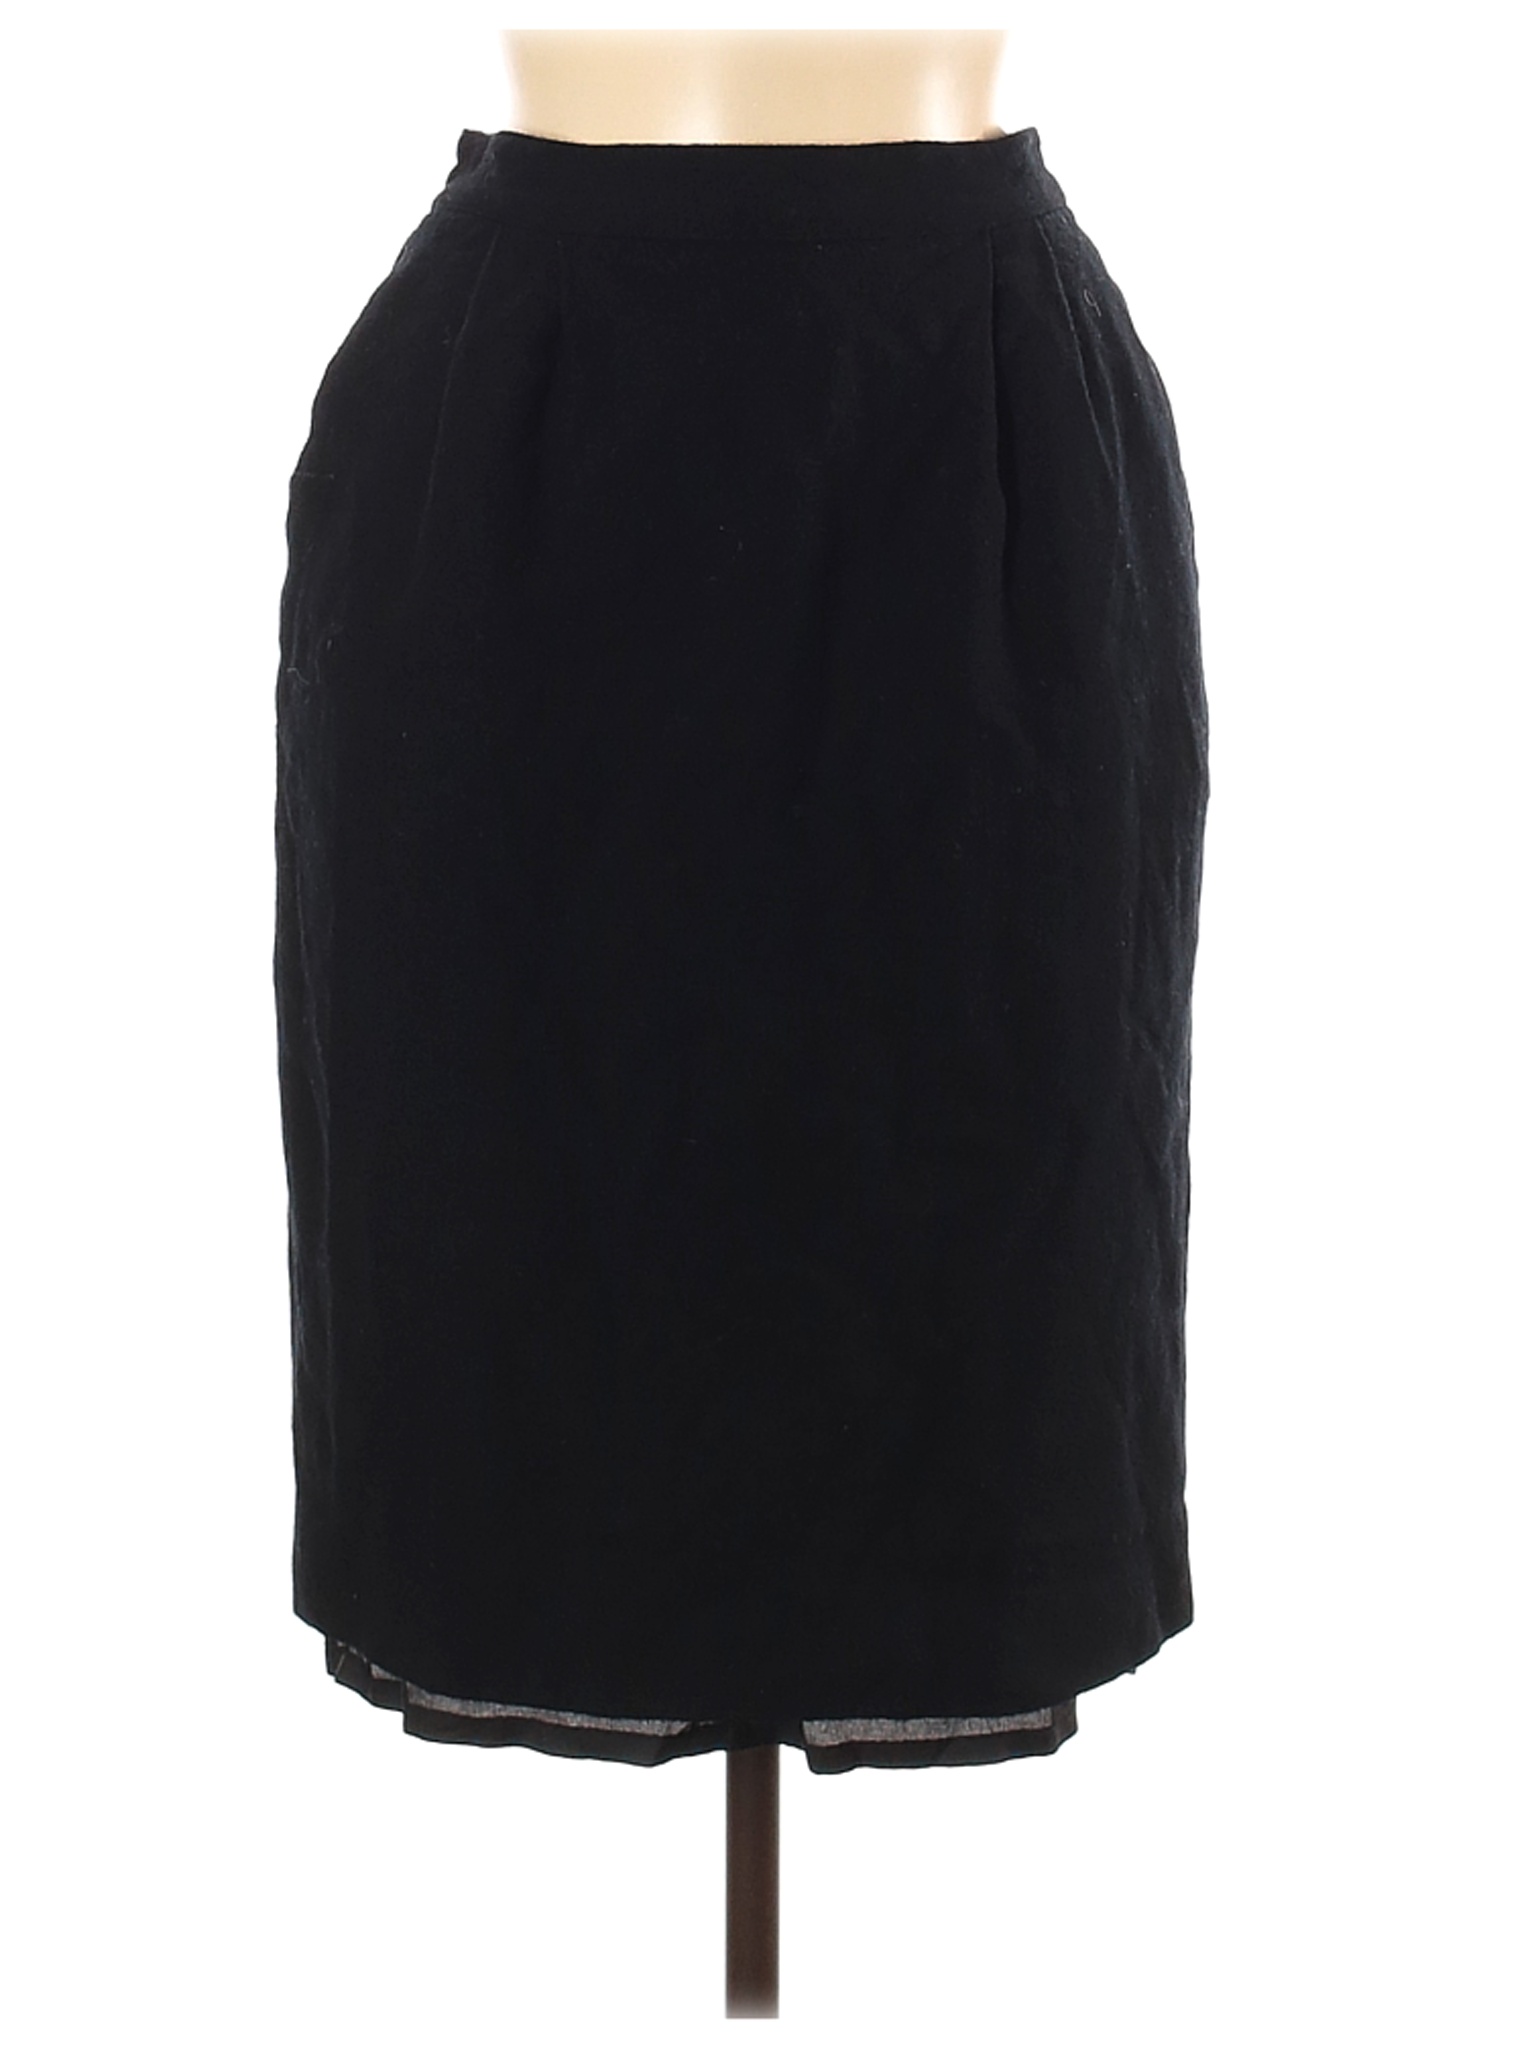 Talbots Women Black Wool Skirt 6 | eBay